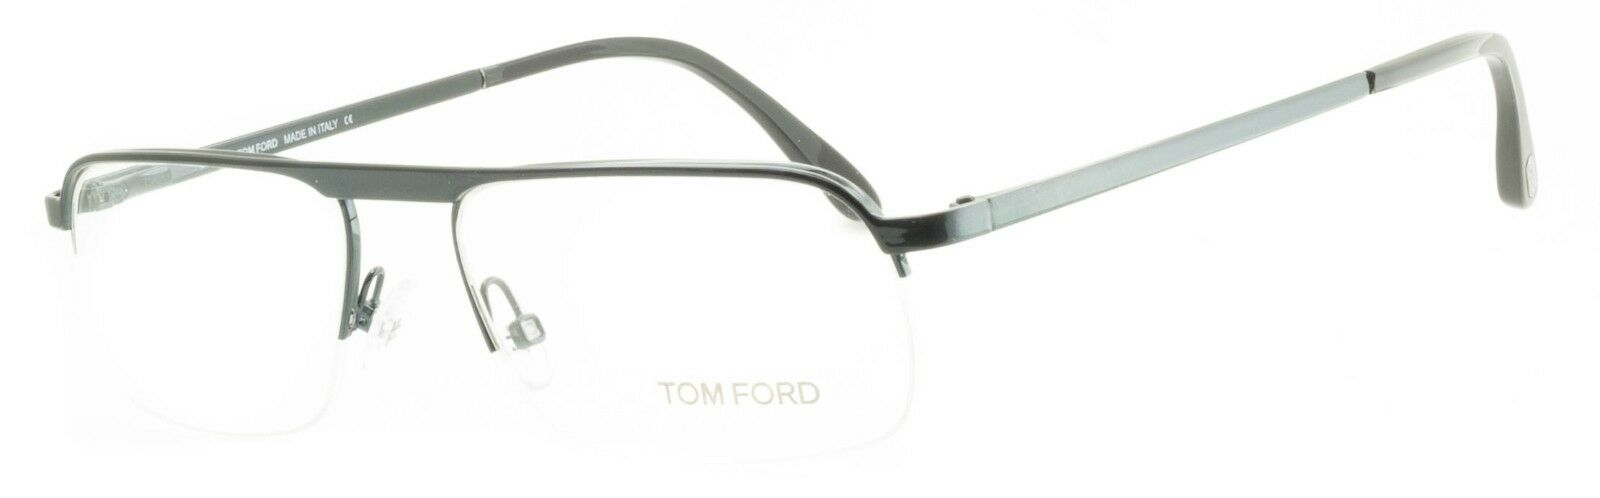 TOM FORD TF 5168 090 Eyewear FRAMES RX Optical Eyeglasses Glasses Italy -  New - GGV Eyewear